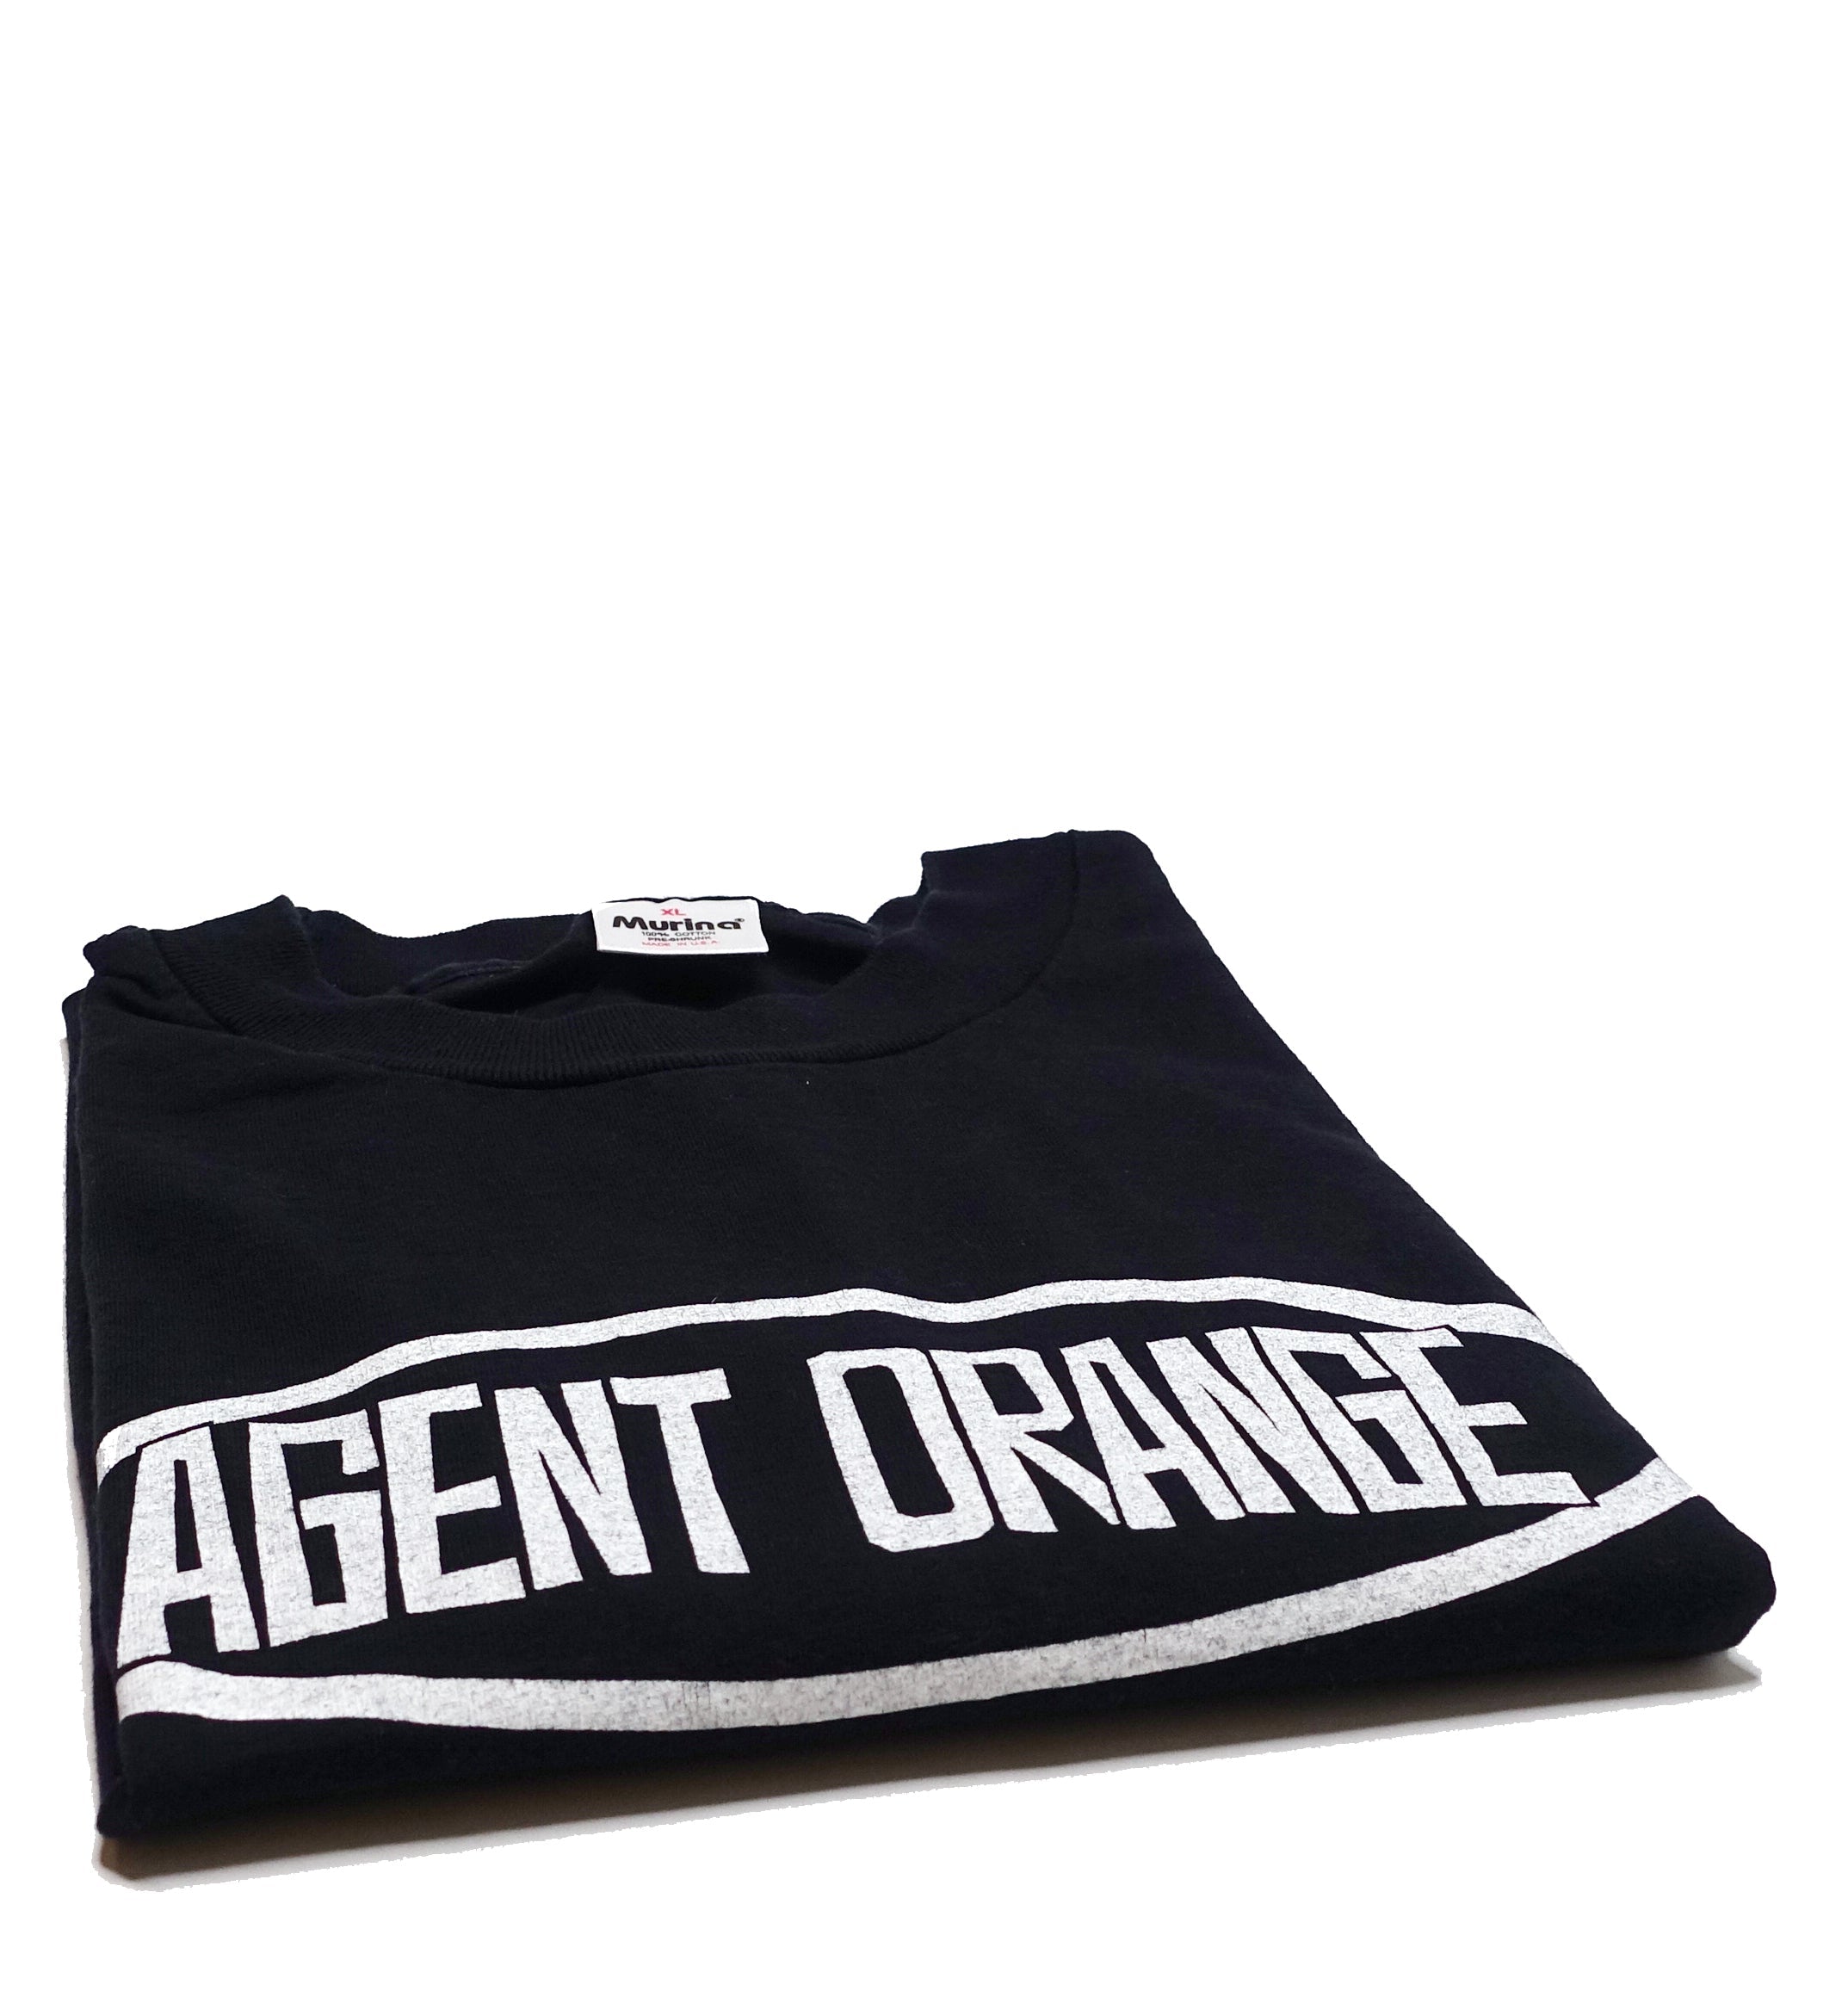 Agent Orange - Oval Logo 90's Shirt Size XL